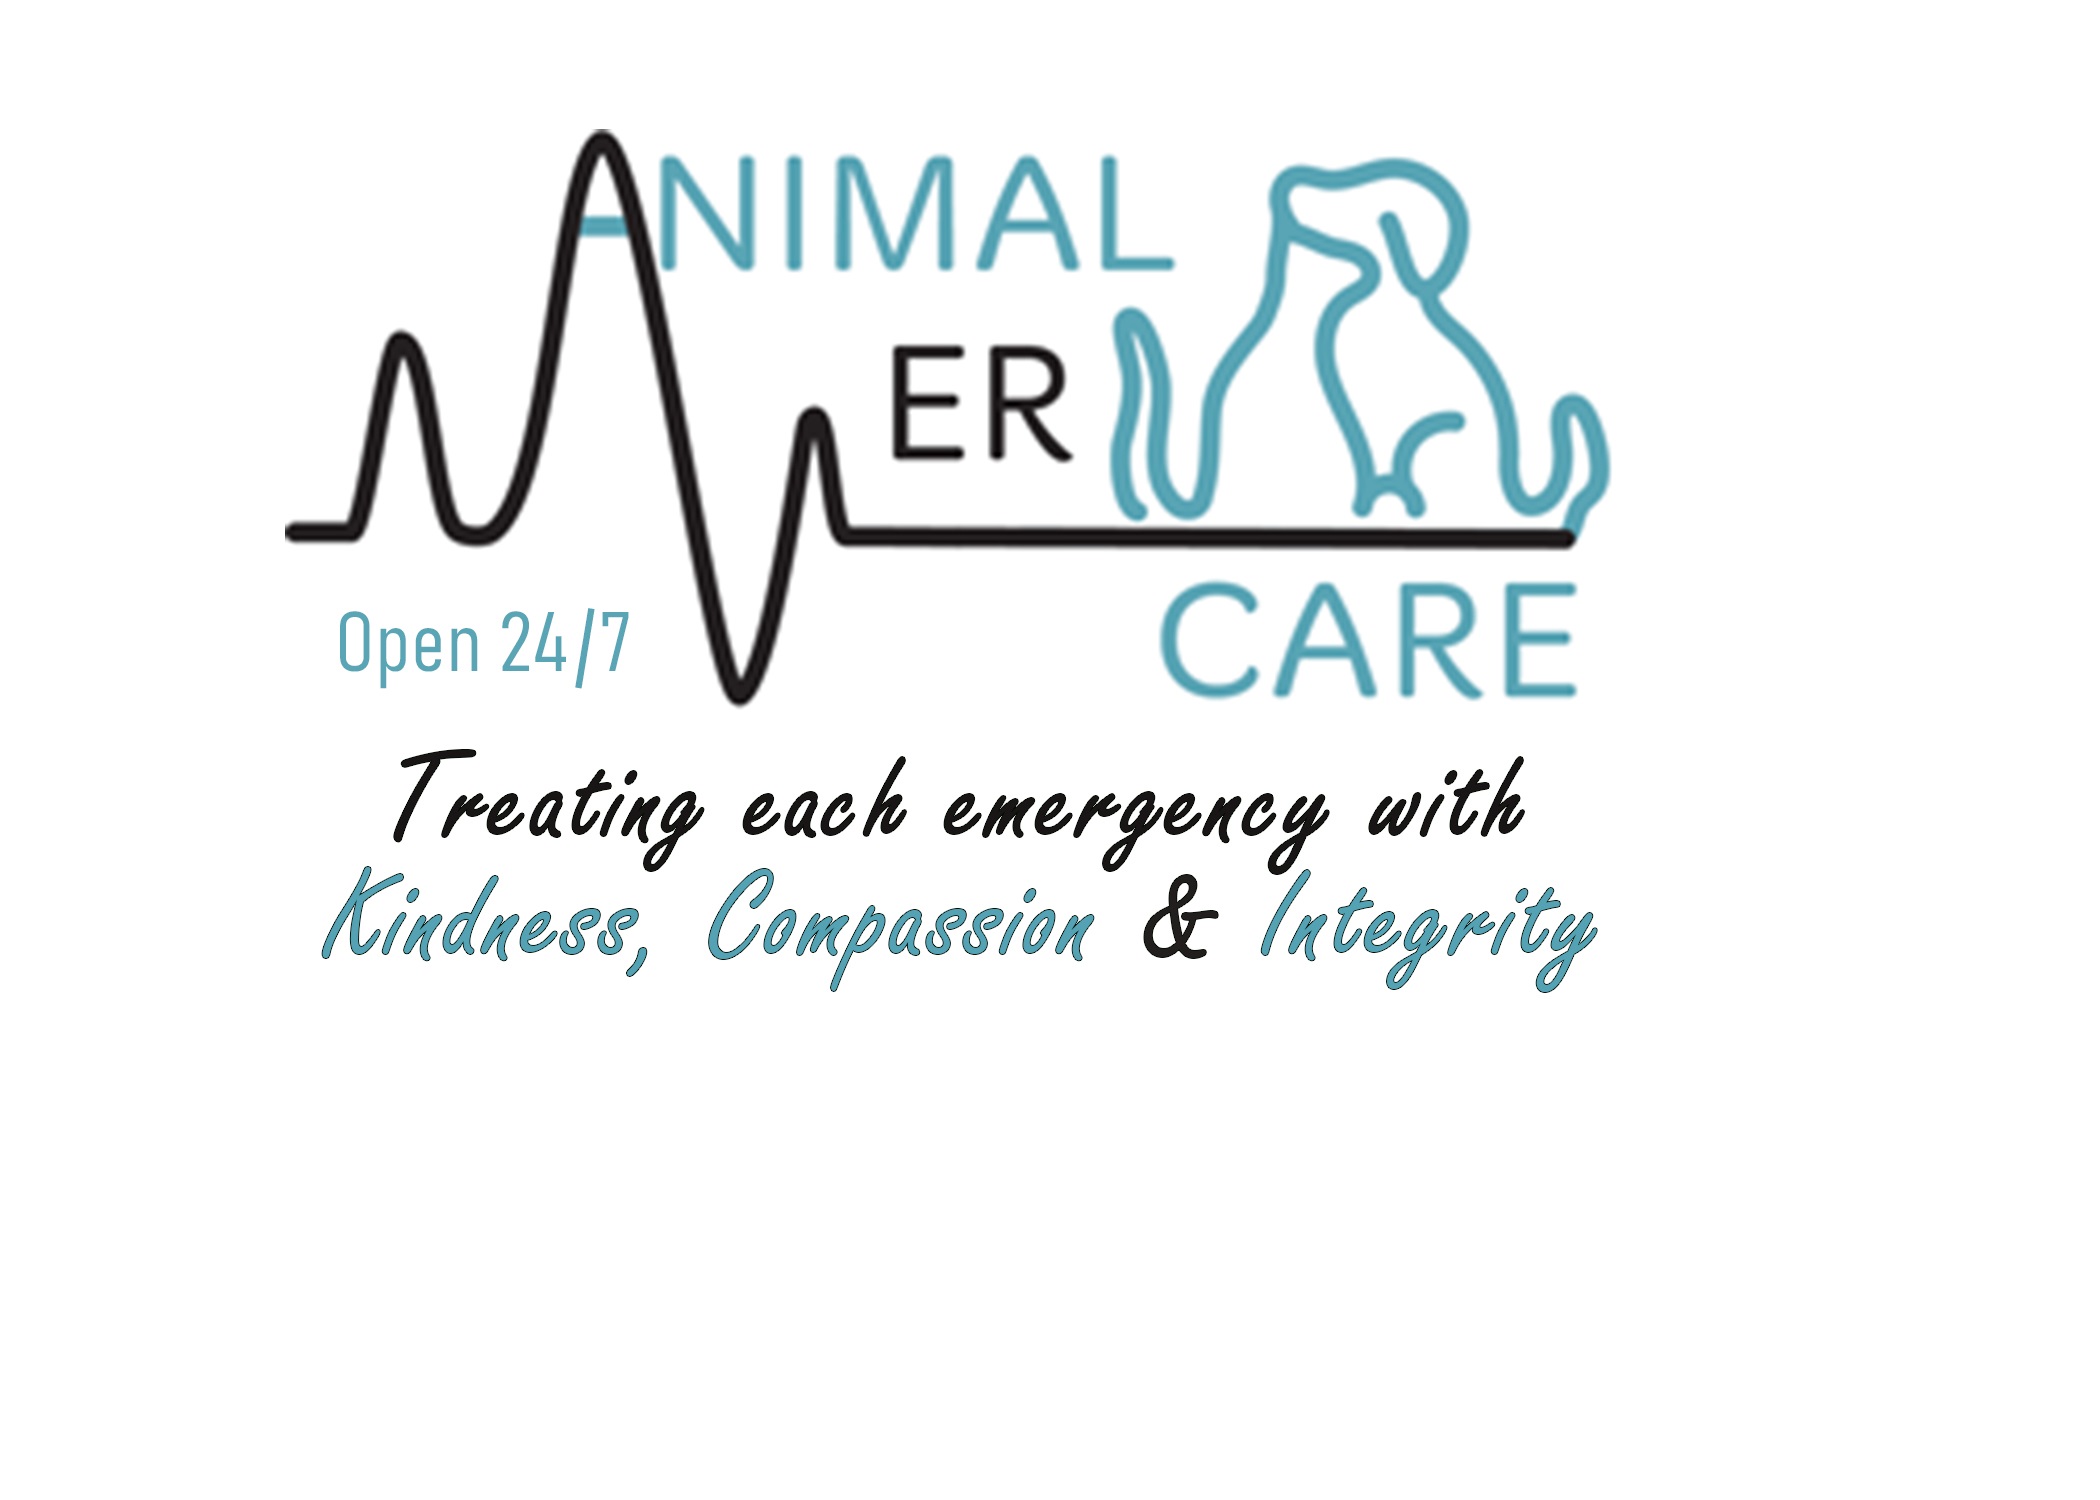 Animal ER Care